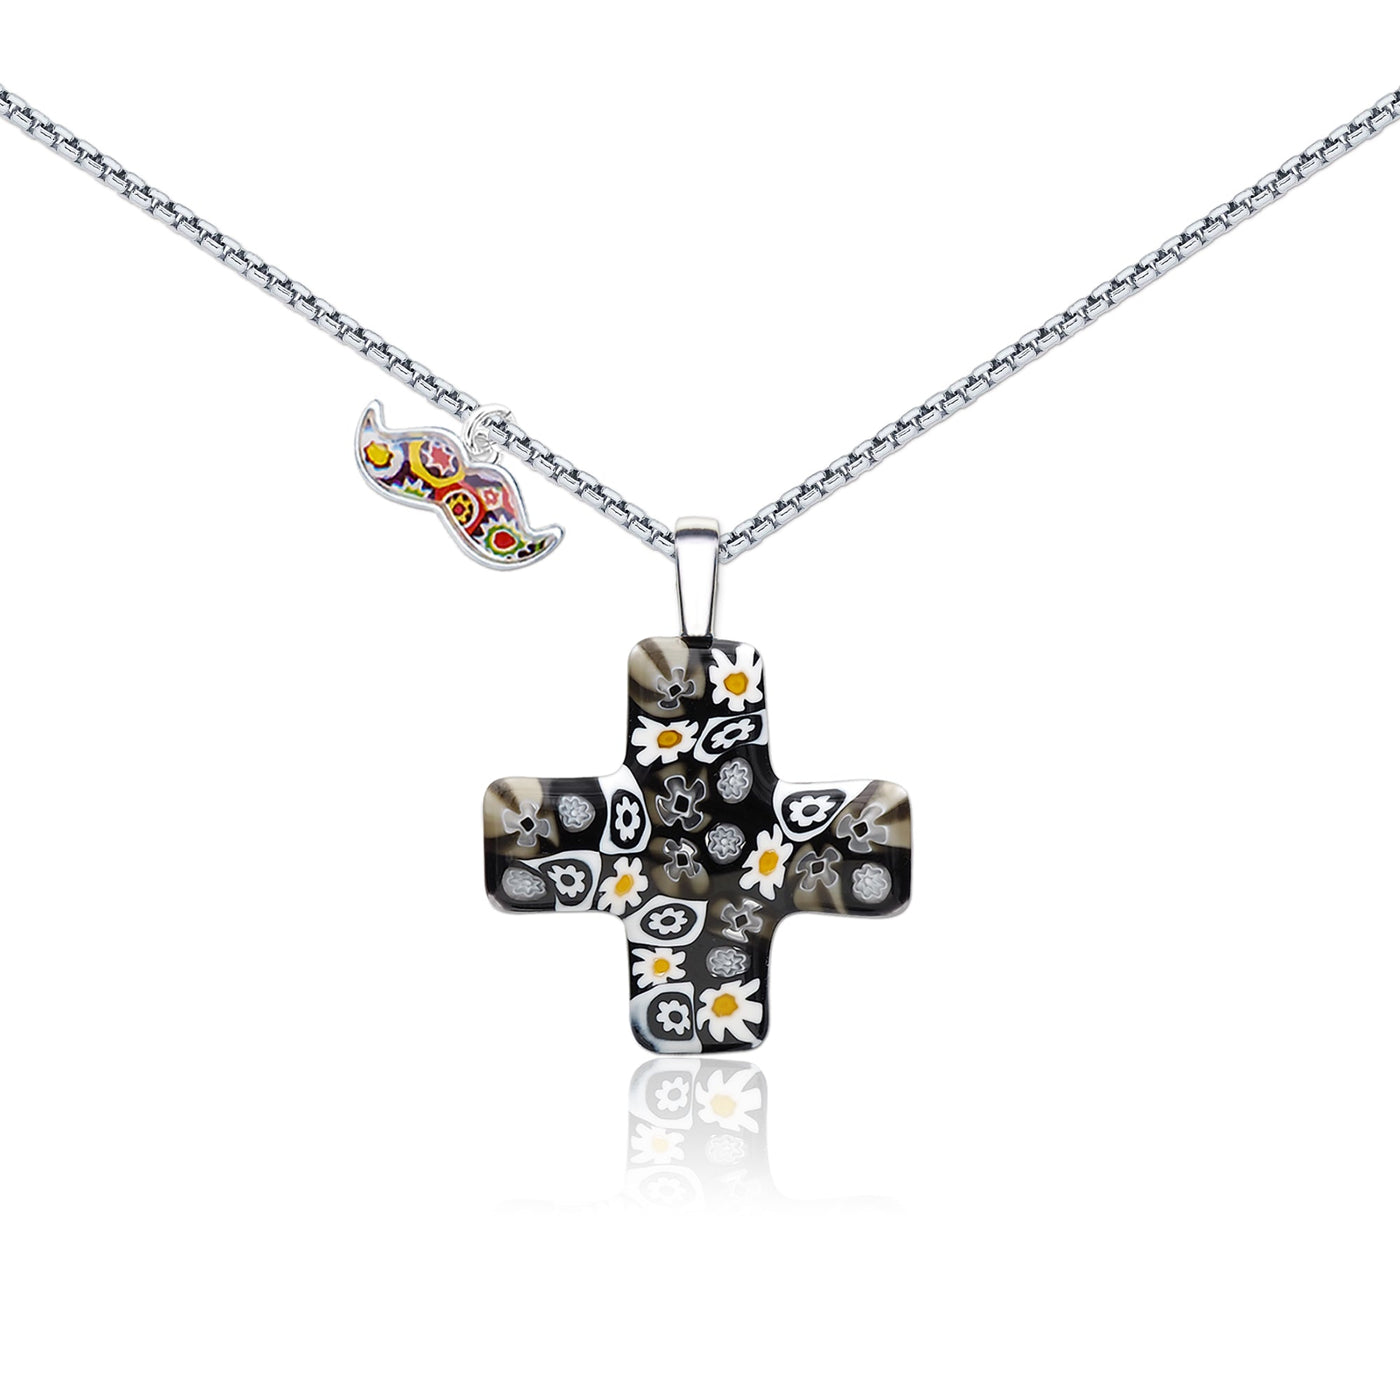 Artylish x Greek Cross Necklace - 1.8mm Anti-Tarnish Silver [+USD42.00] - Pendant Necklace